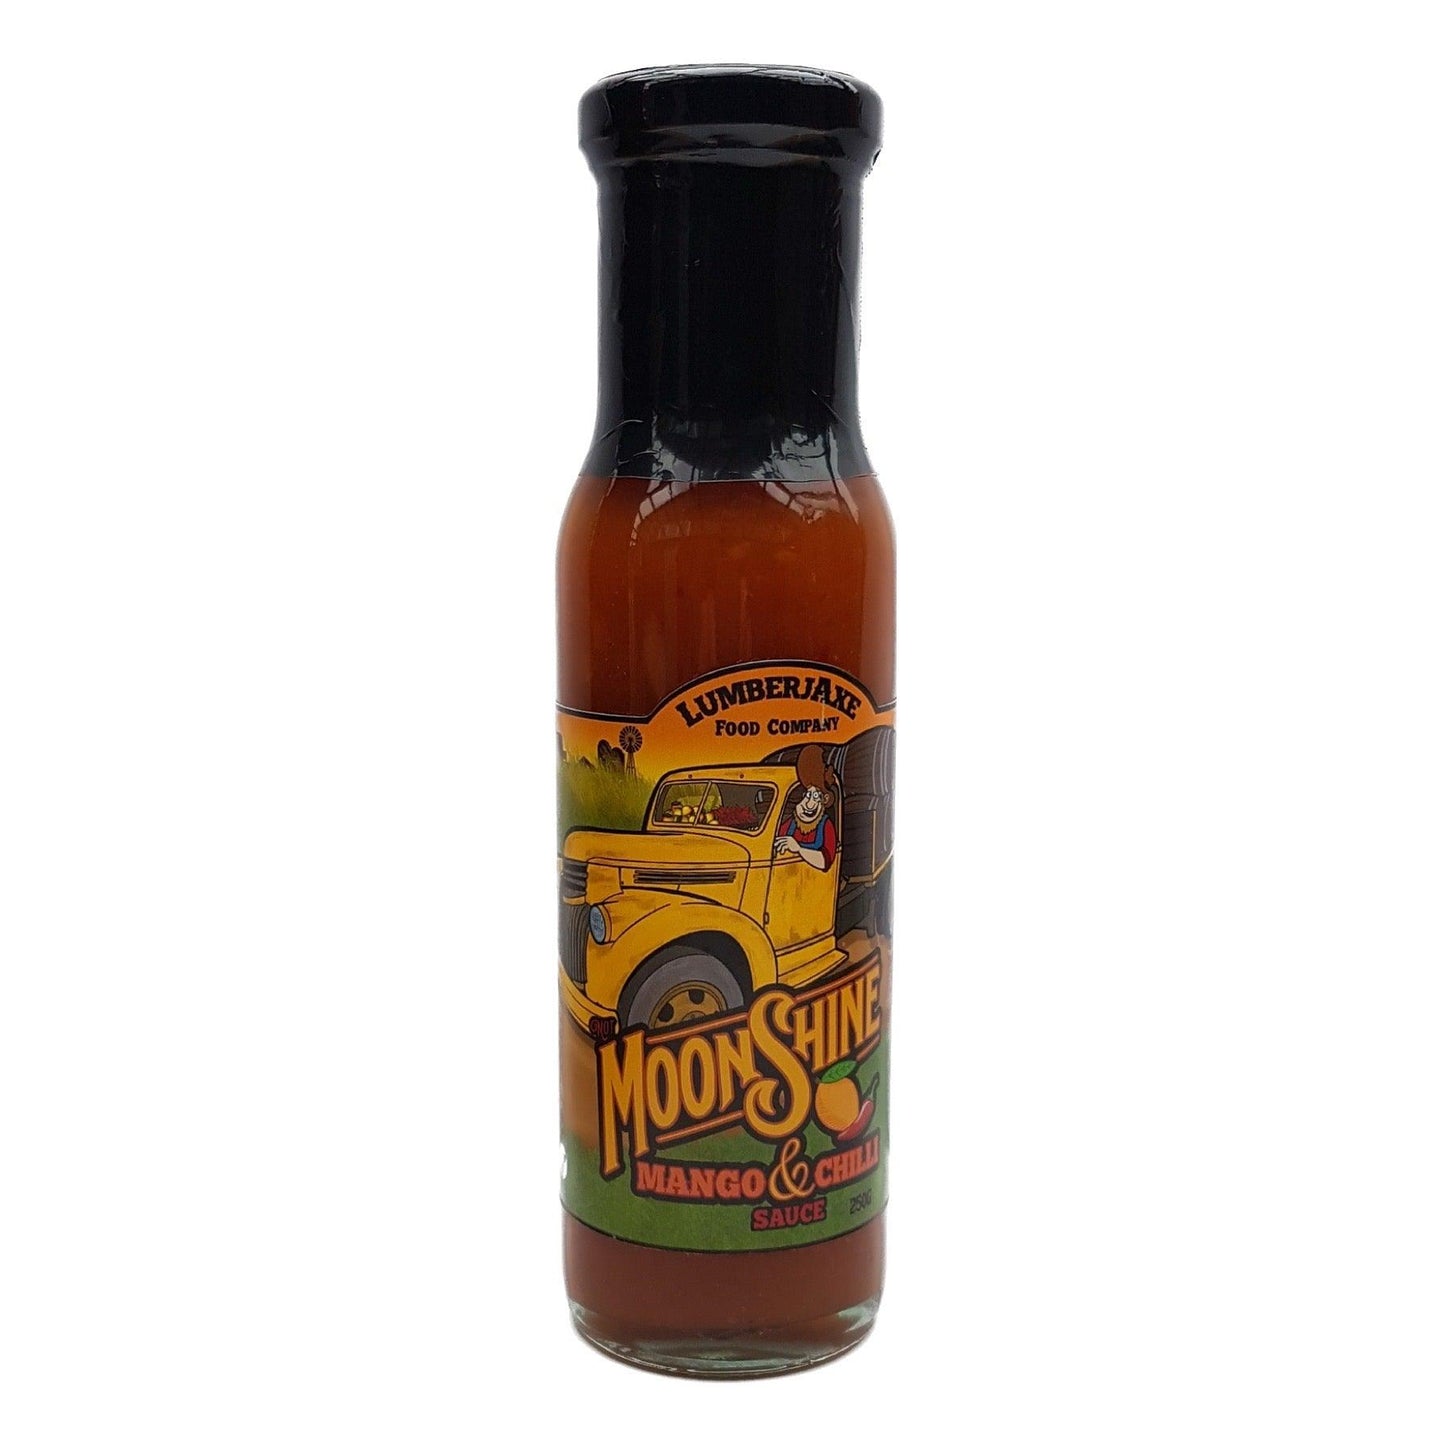 MoonShine Mango & Chilli Sauce 250g by LumberjAxe - BBQ Land